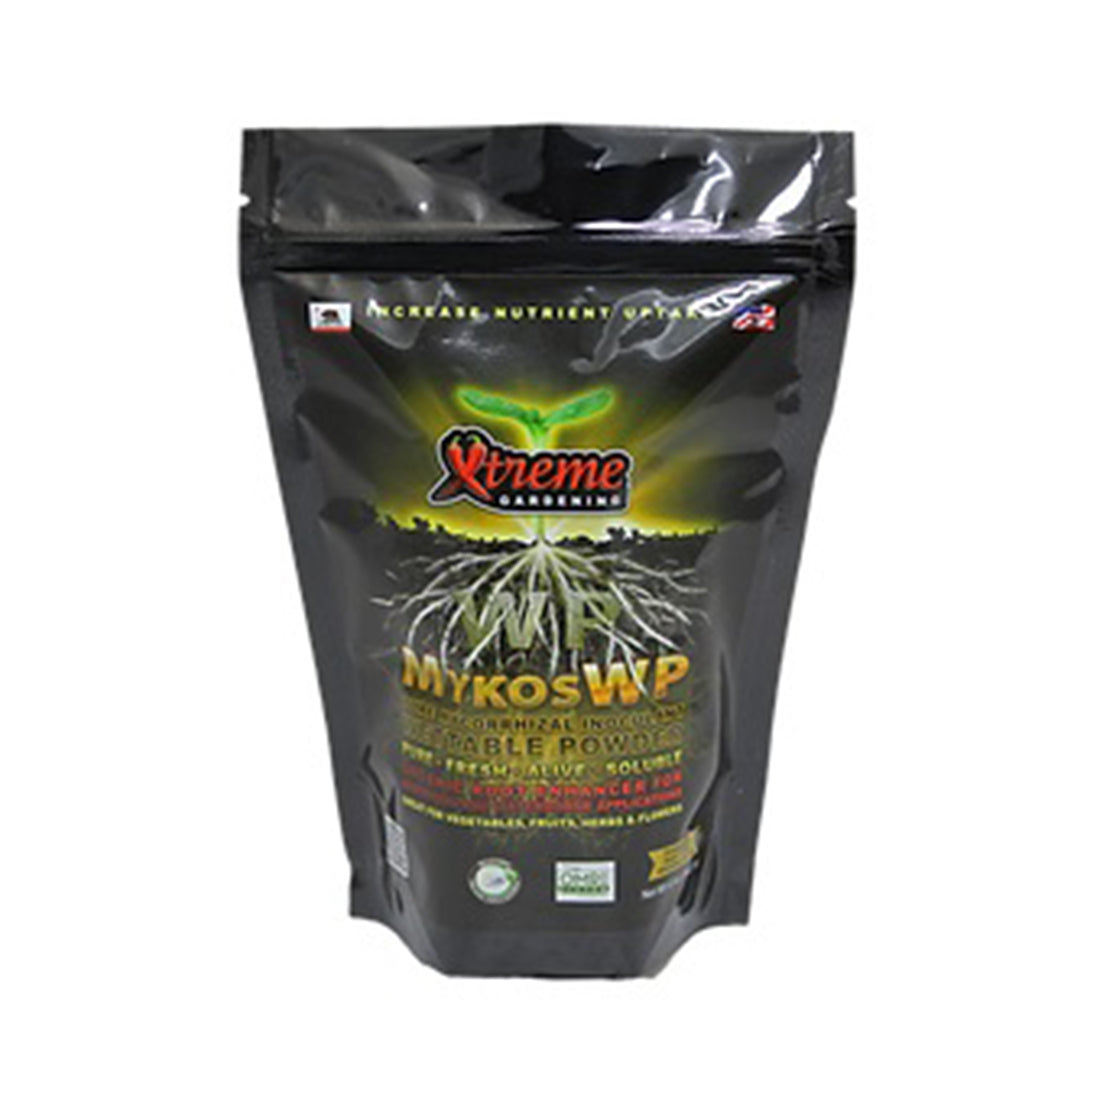 Mykos Wettable Powder - Mycorrhizal Inoculant | 22.7 Kilos